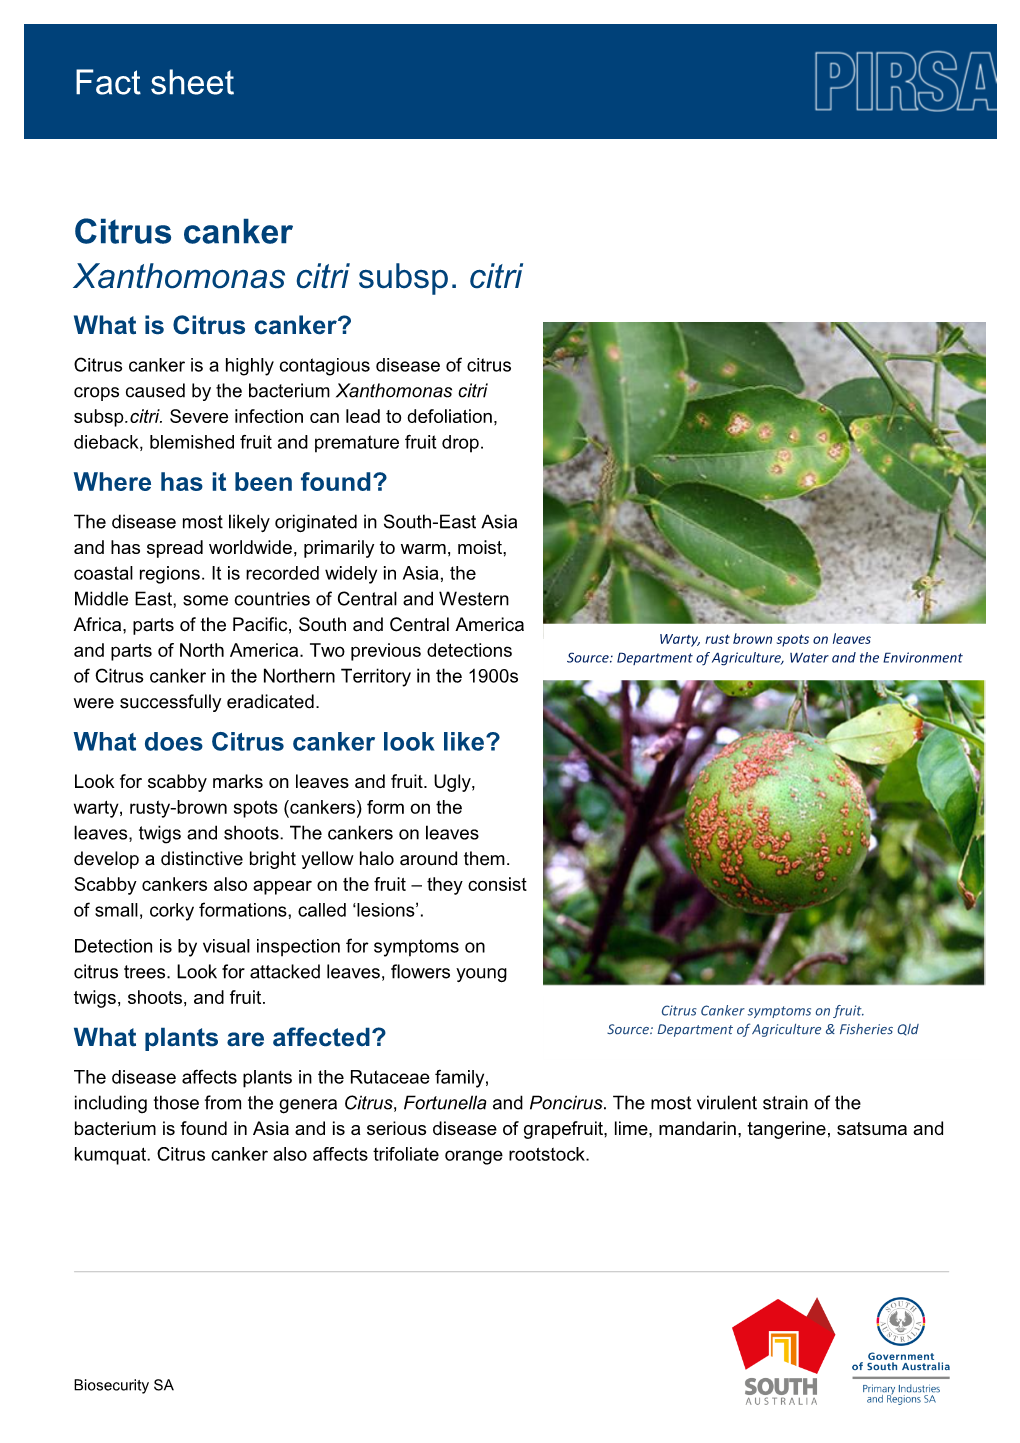 Fact Sheet Citrus Canker Xanthomonas Citri Subsp. Citri